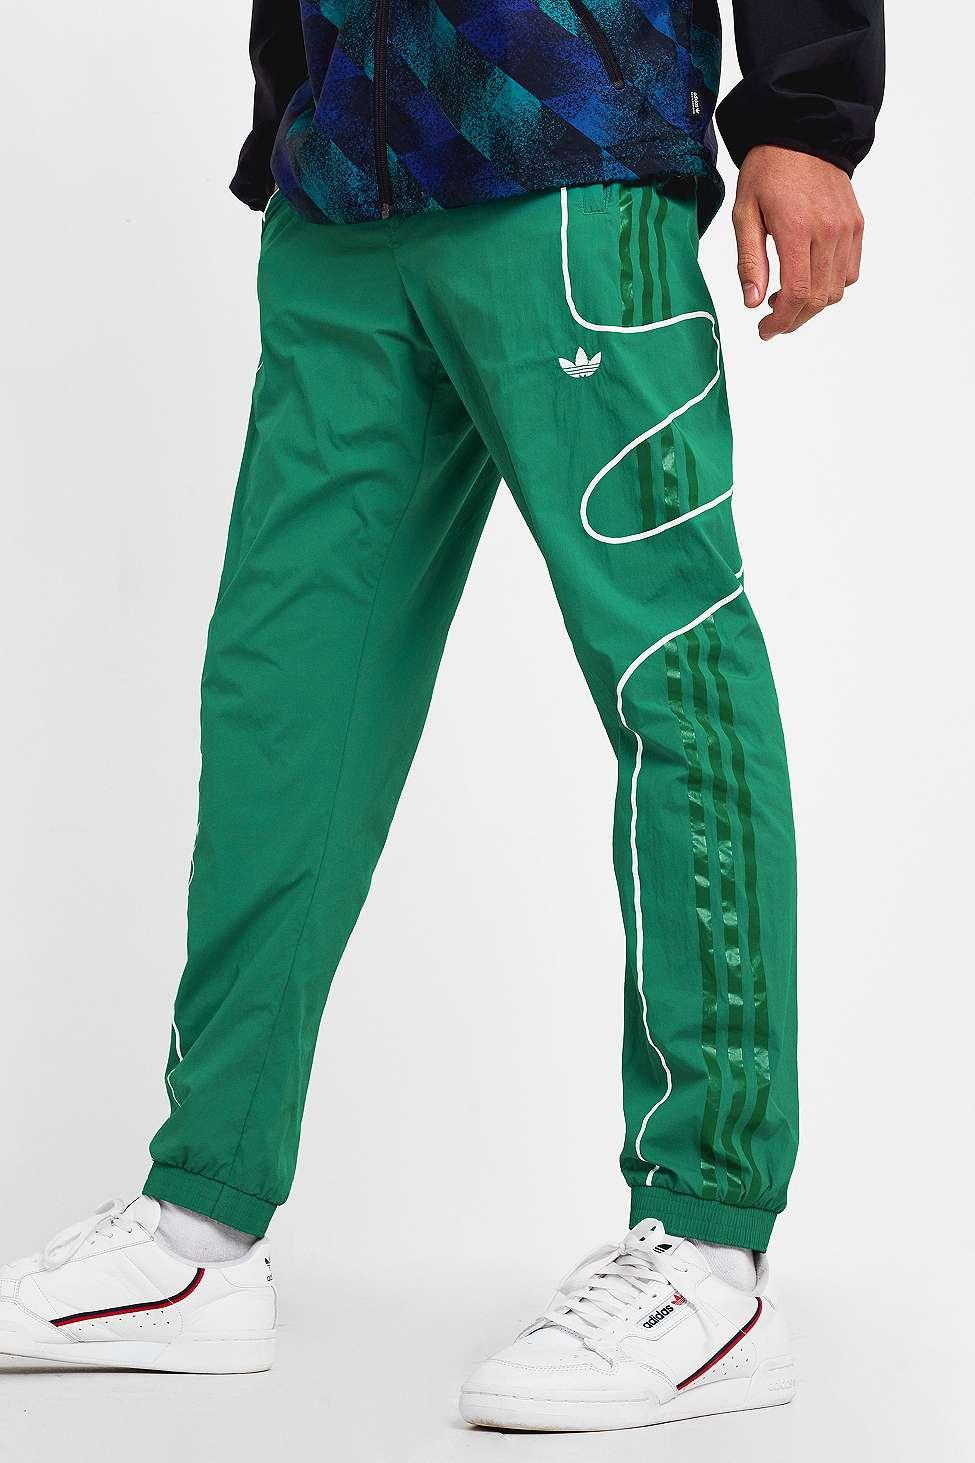 adidas flamestrike track pants green|57 